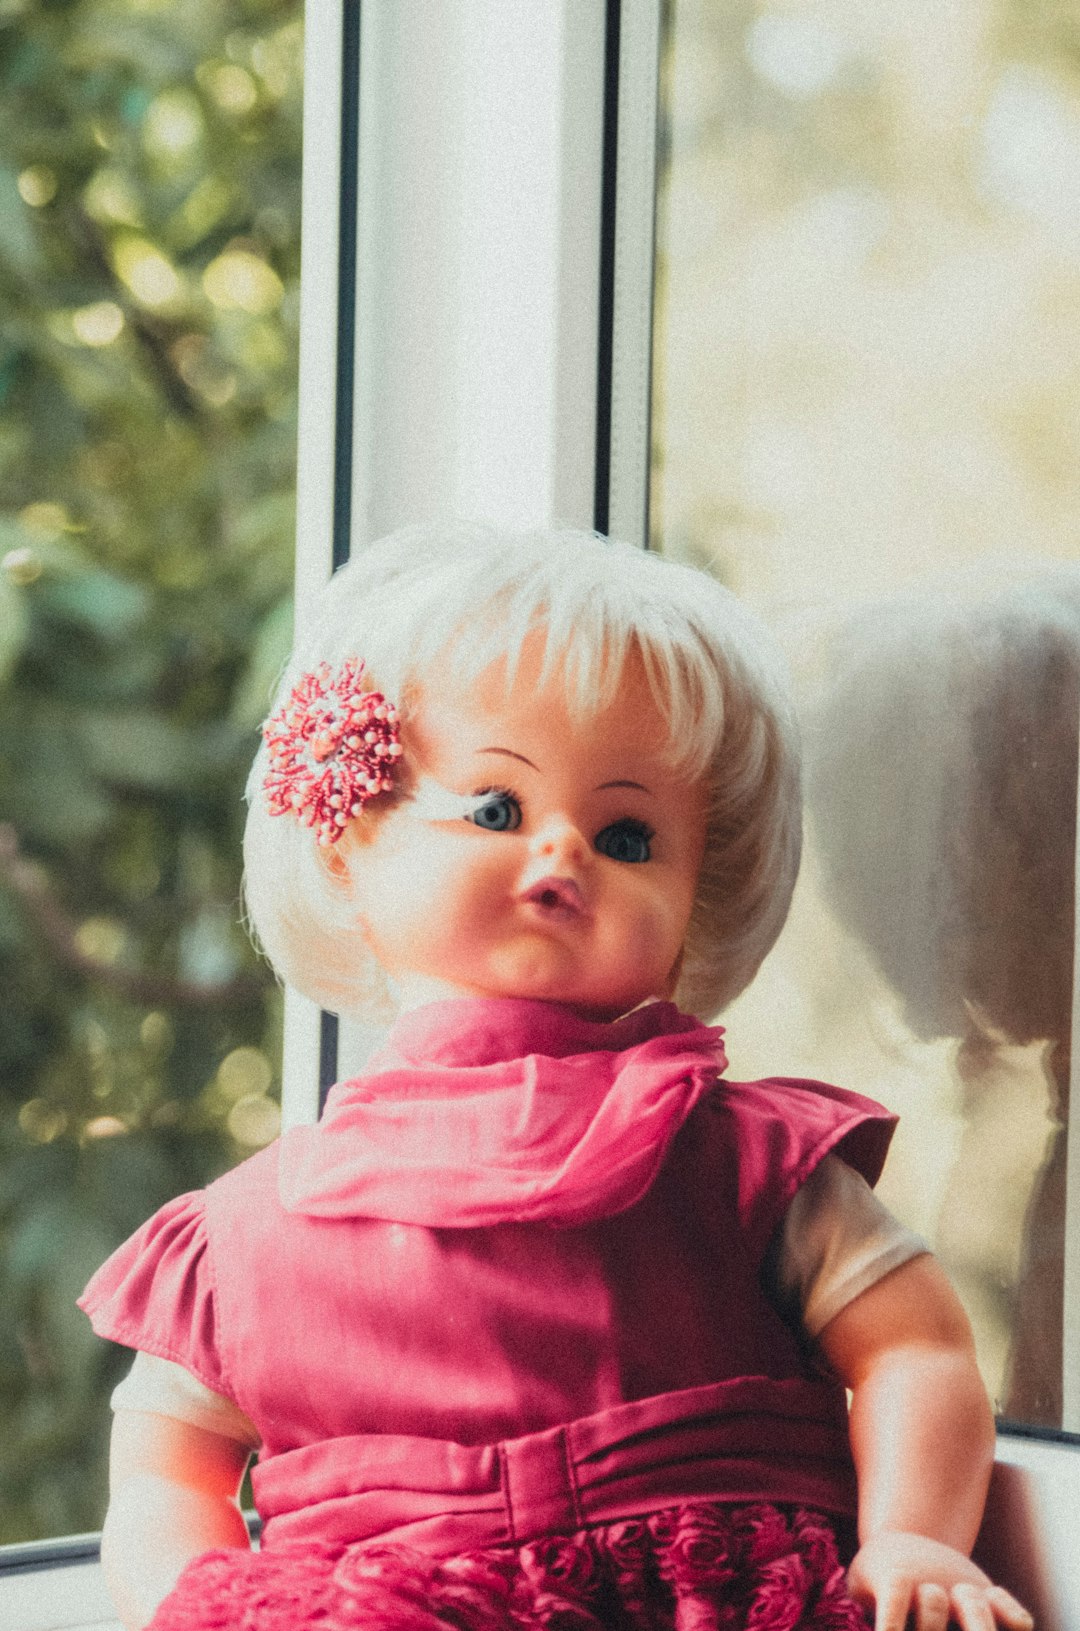 baby in red shirt standing near window